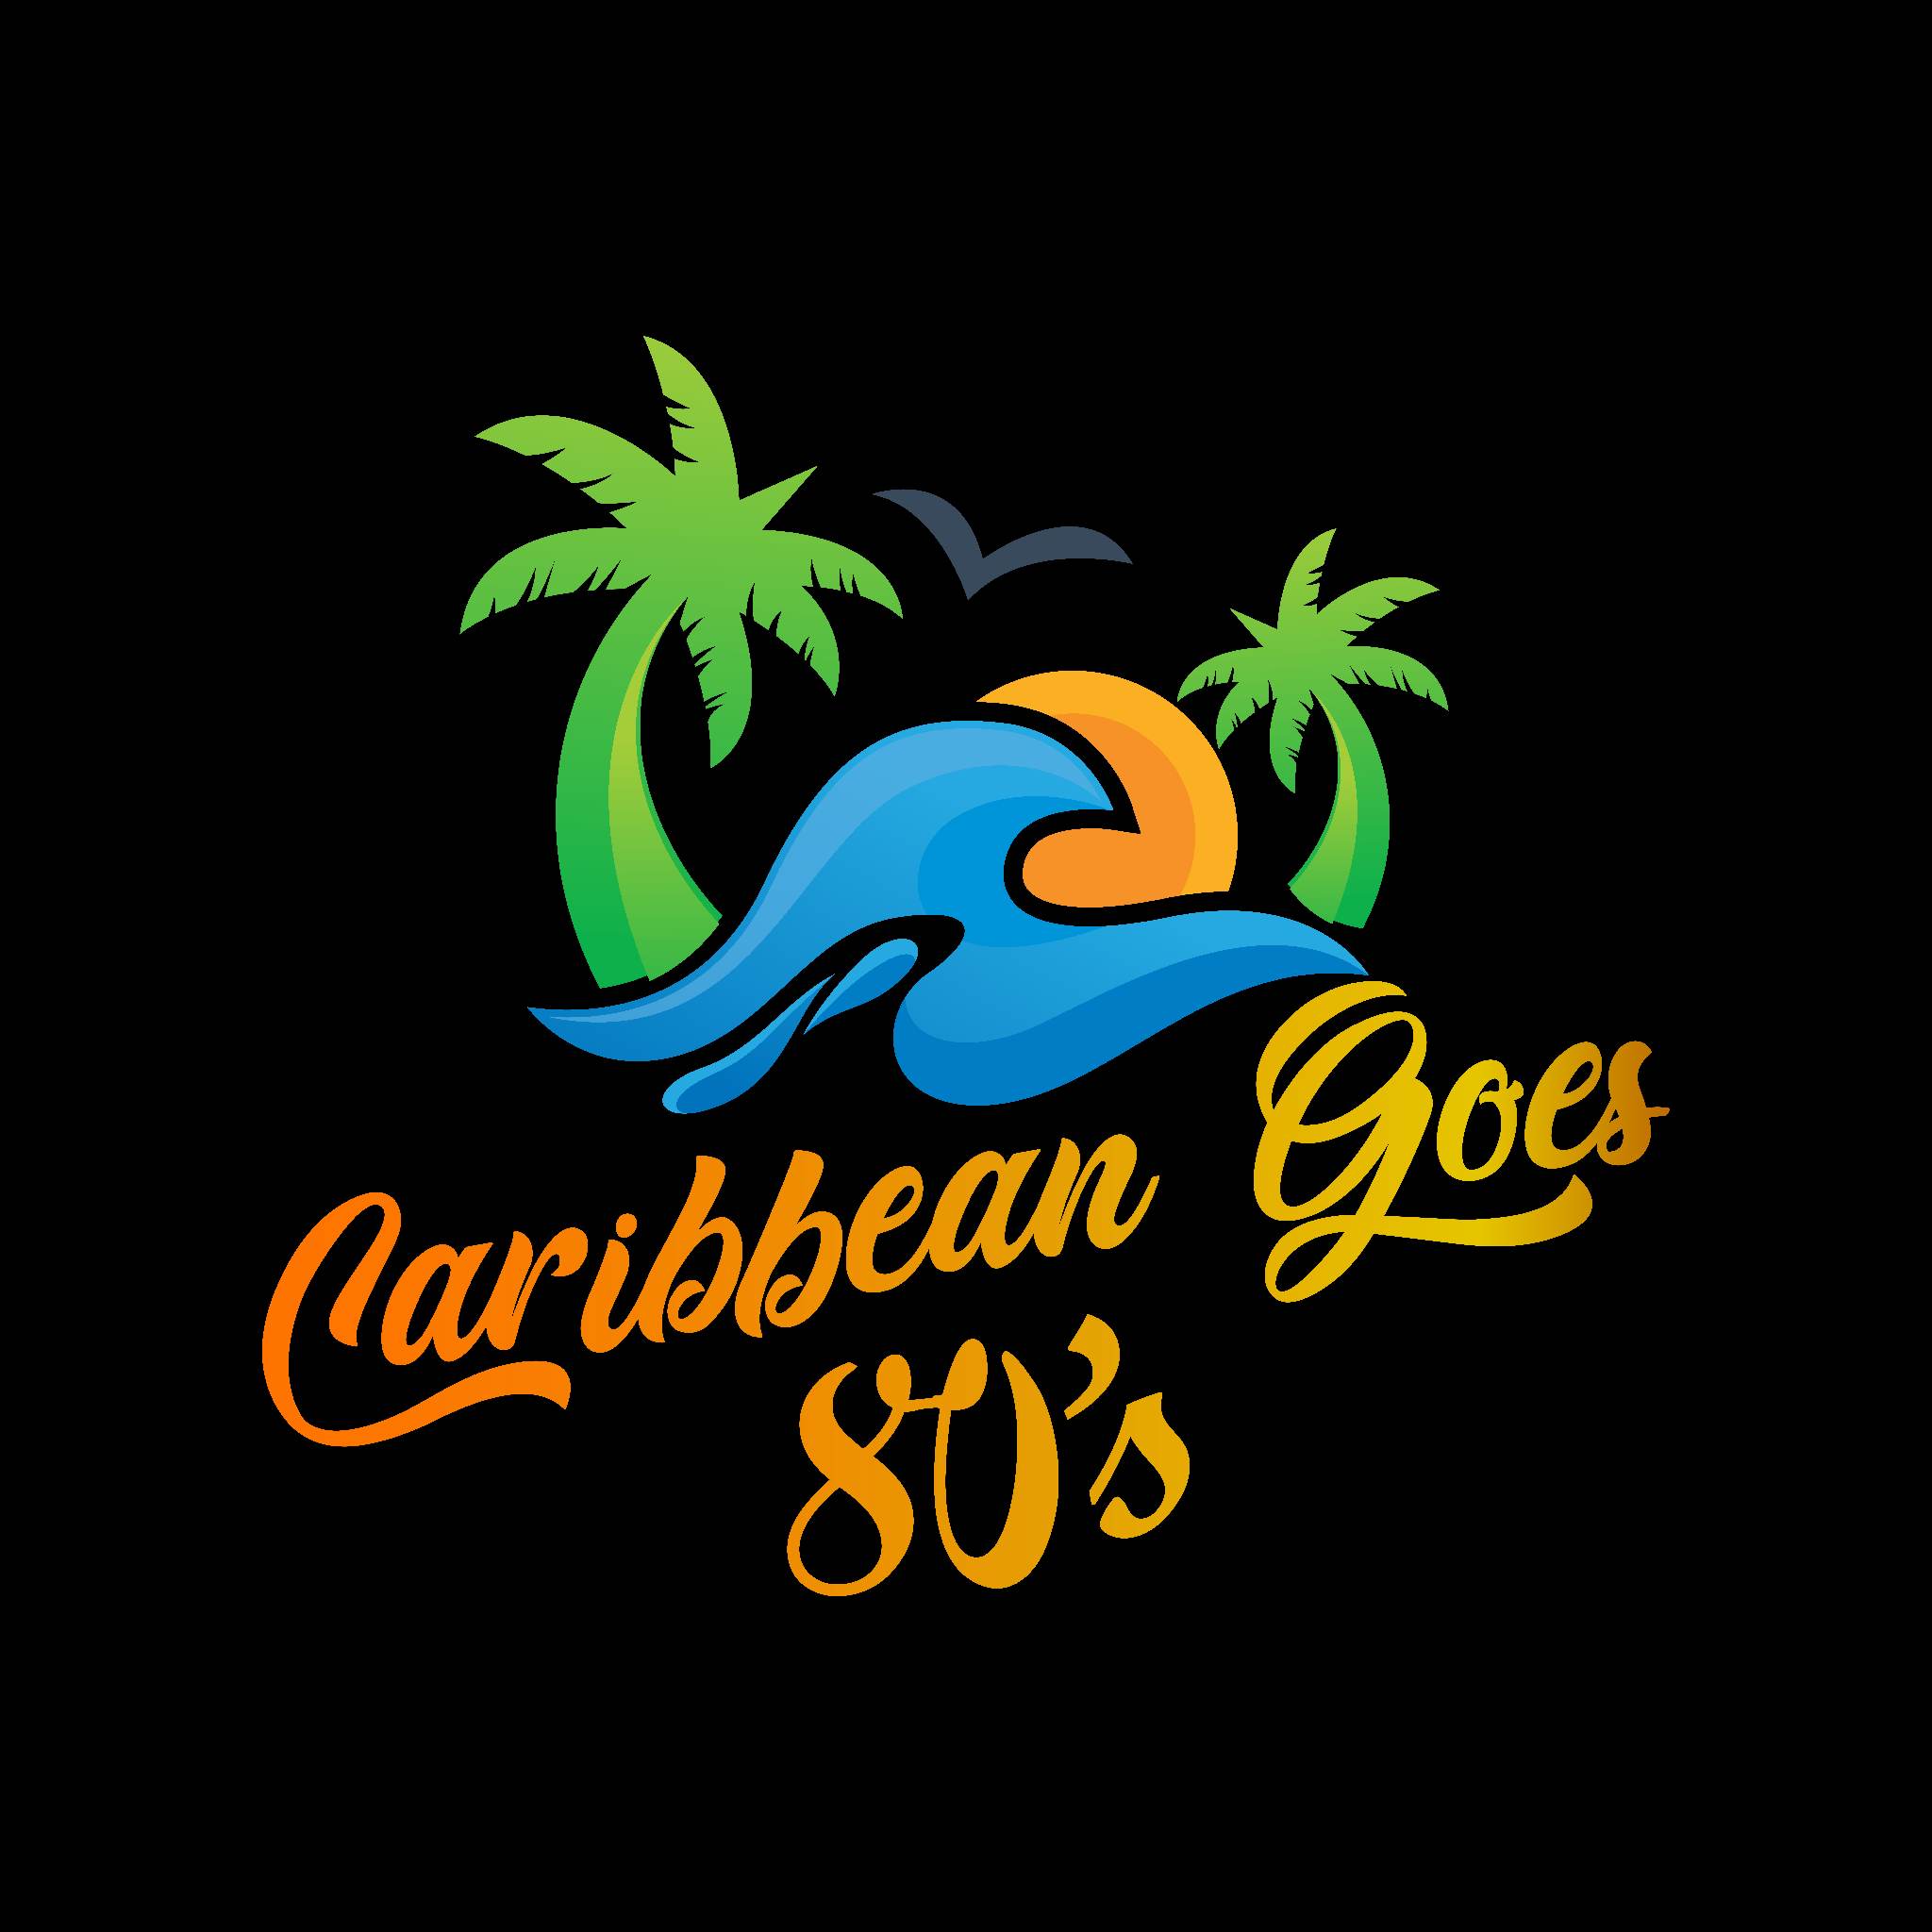 Caribbean Goes 80's